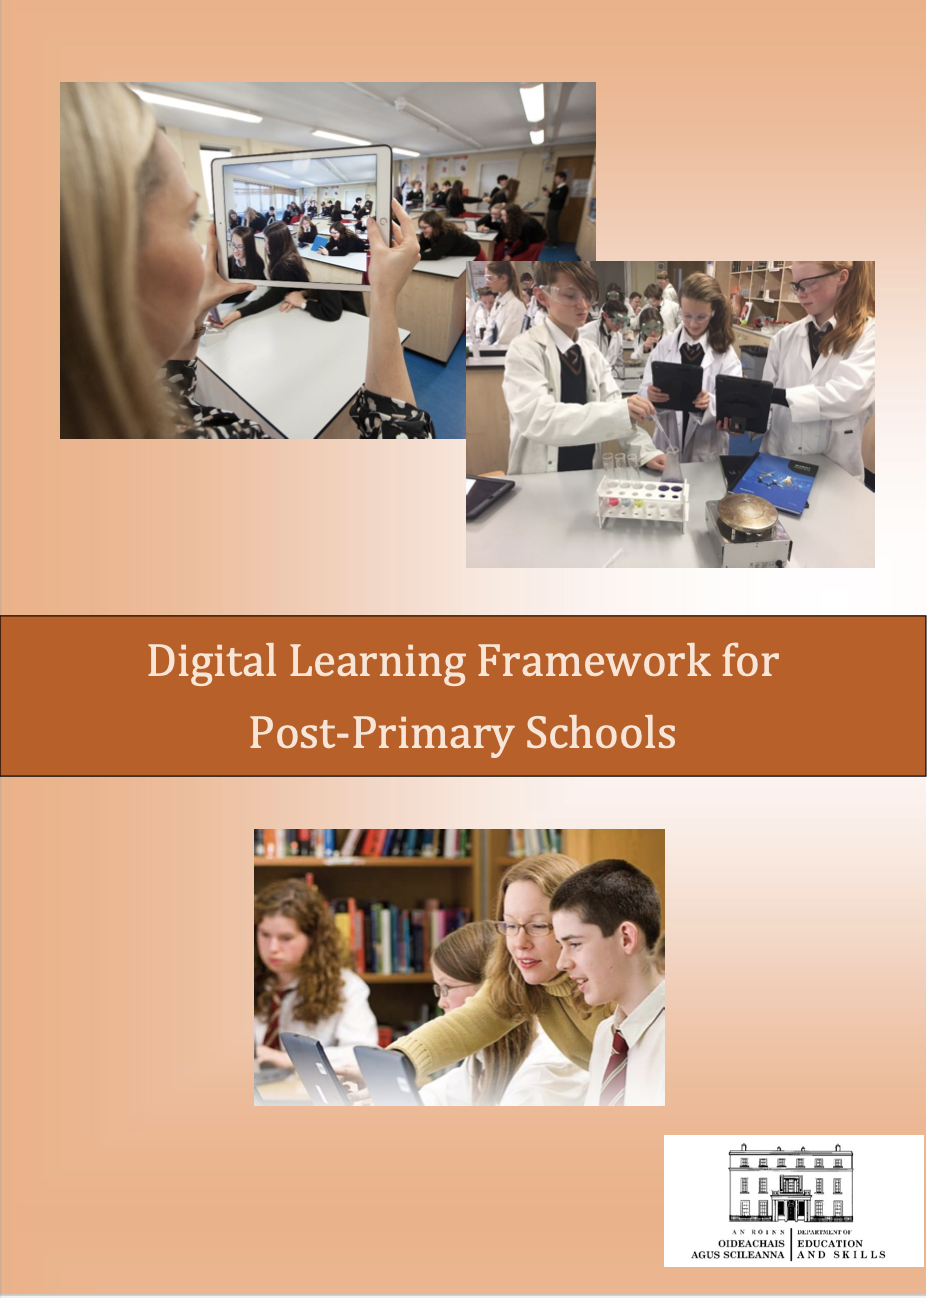 Digital Learning Framework for Post-Primary Schools